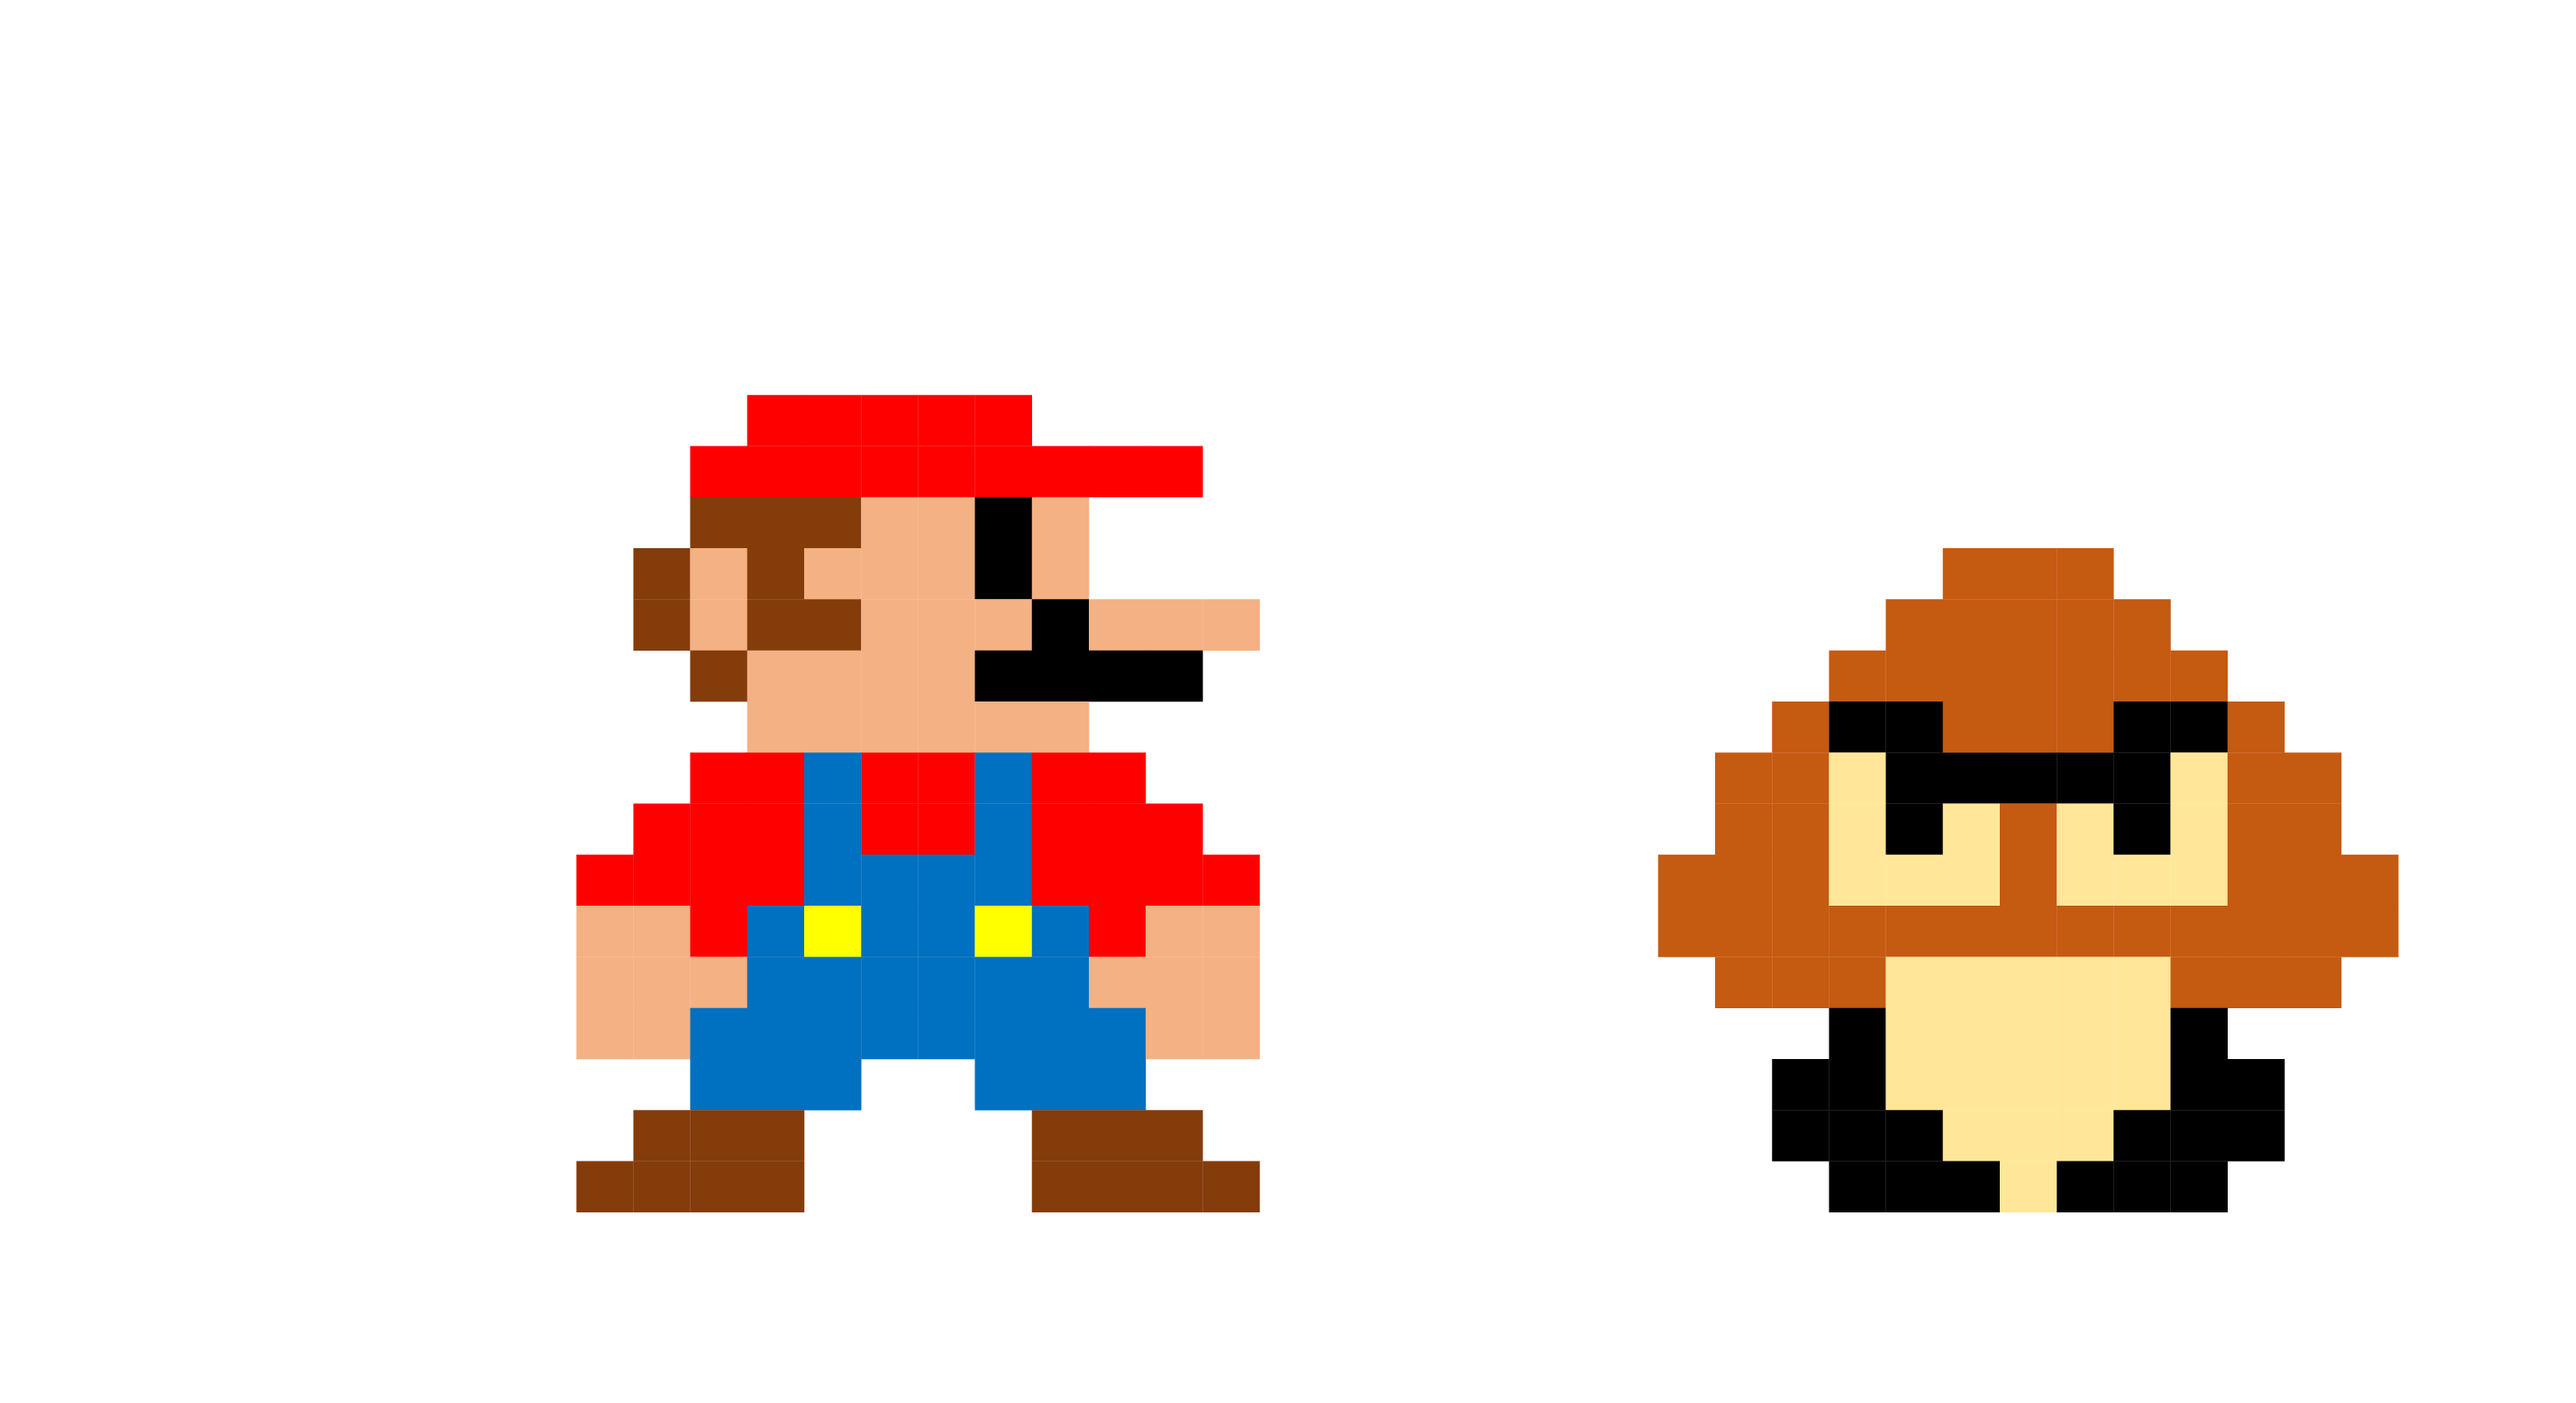 Mario bros 8. Марио 8 бит. Гриб из Марио пиксельный. Марио 8 бит PNG. Аватар Марио 8 bit PNG.